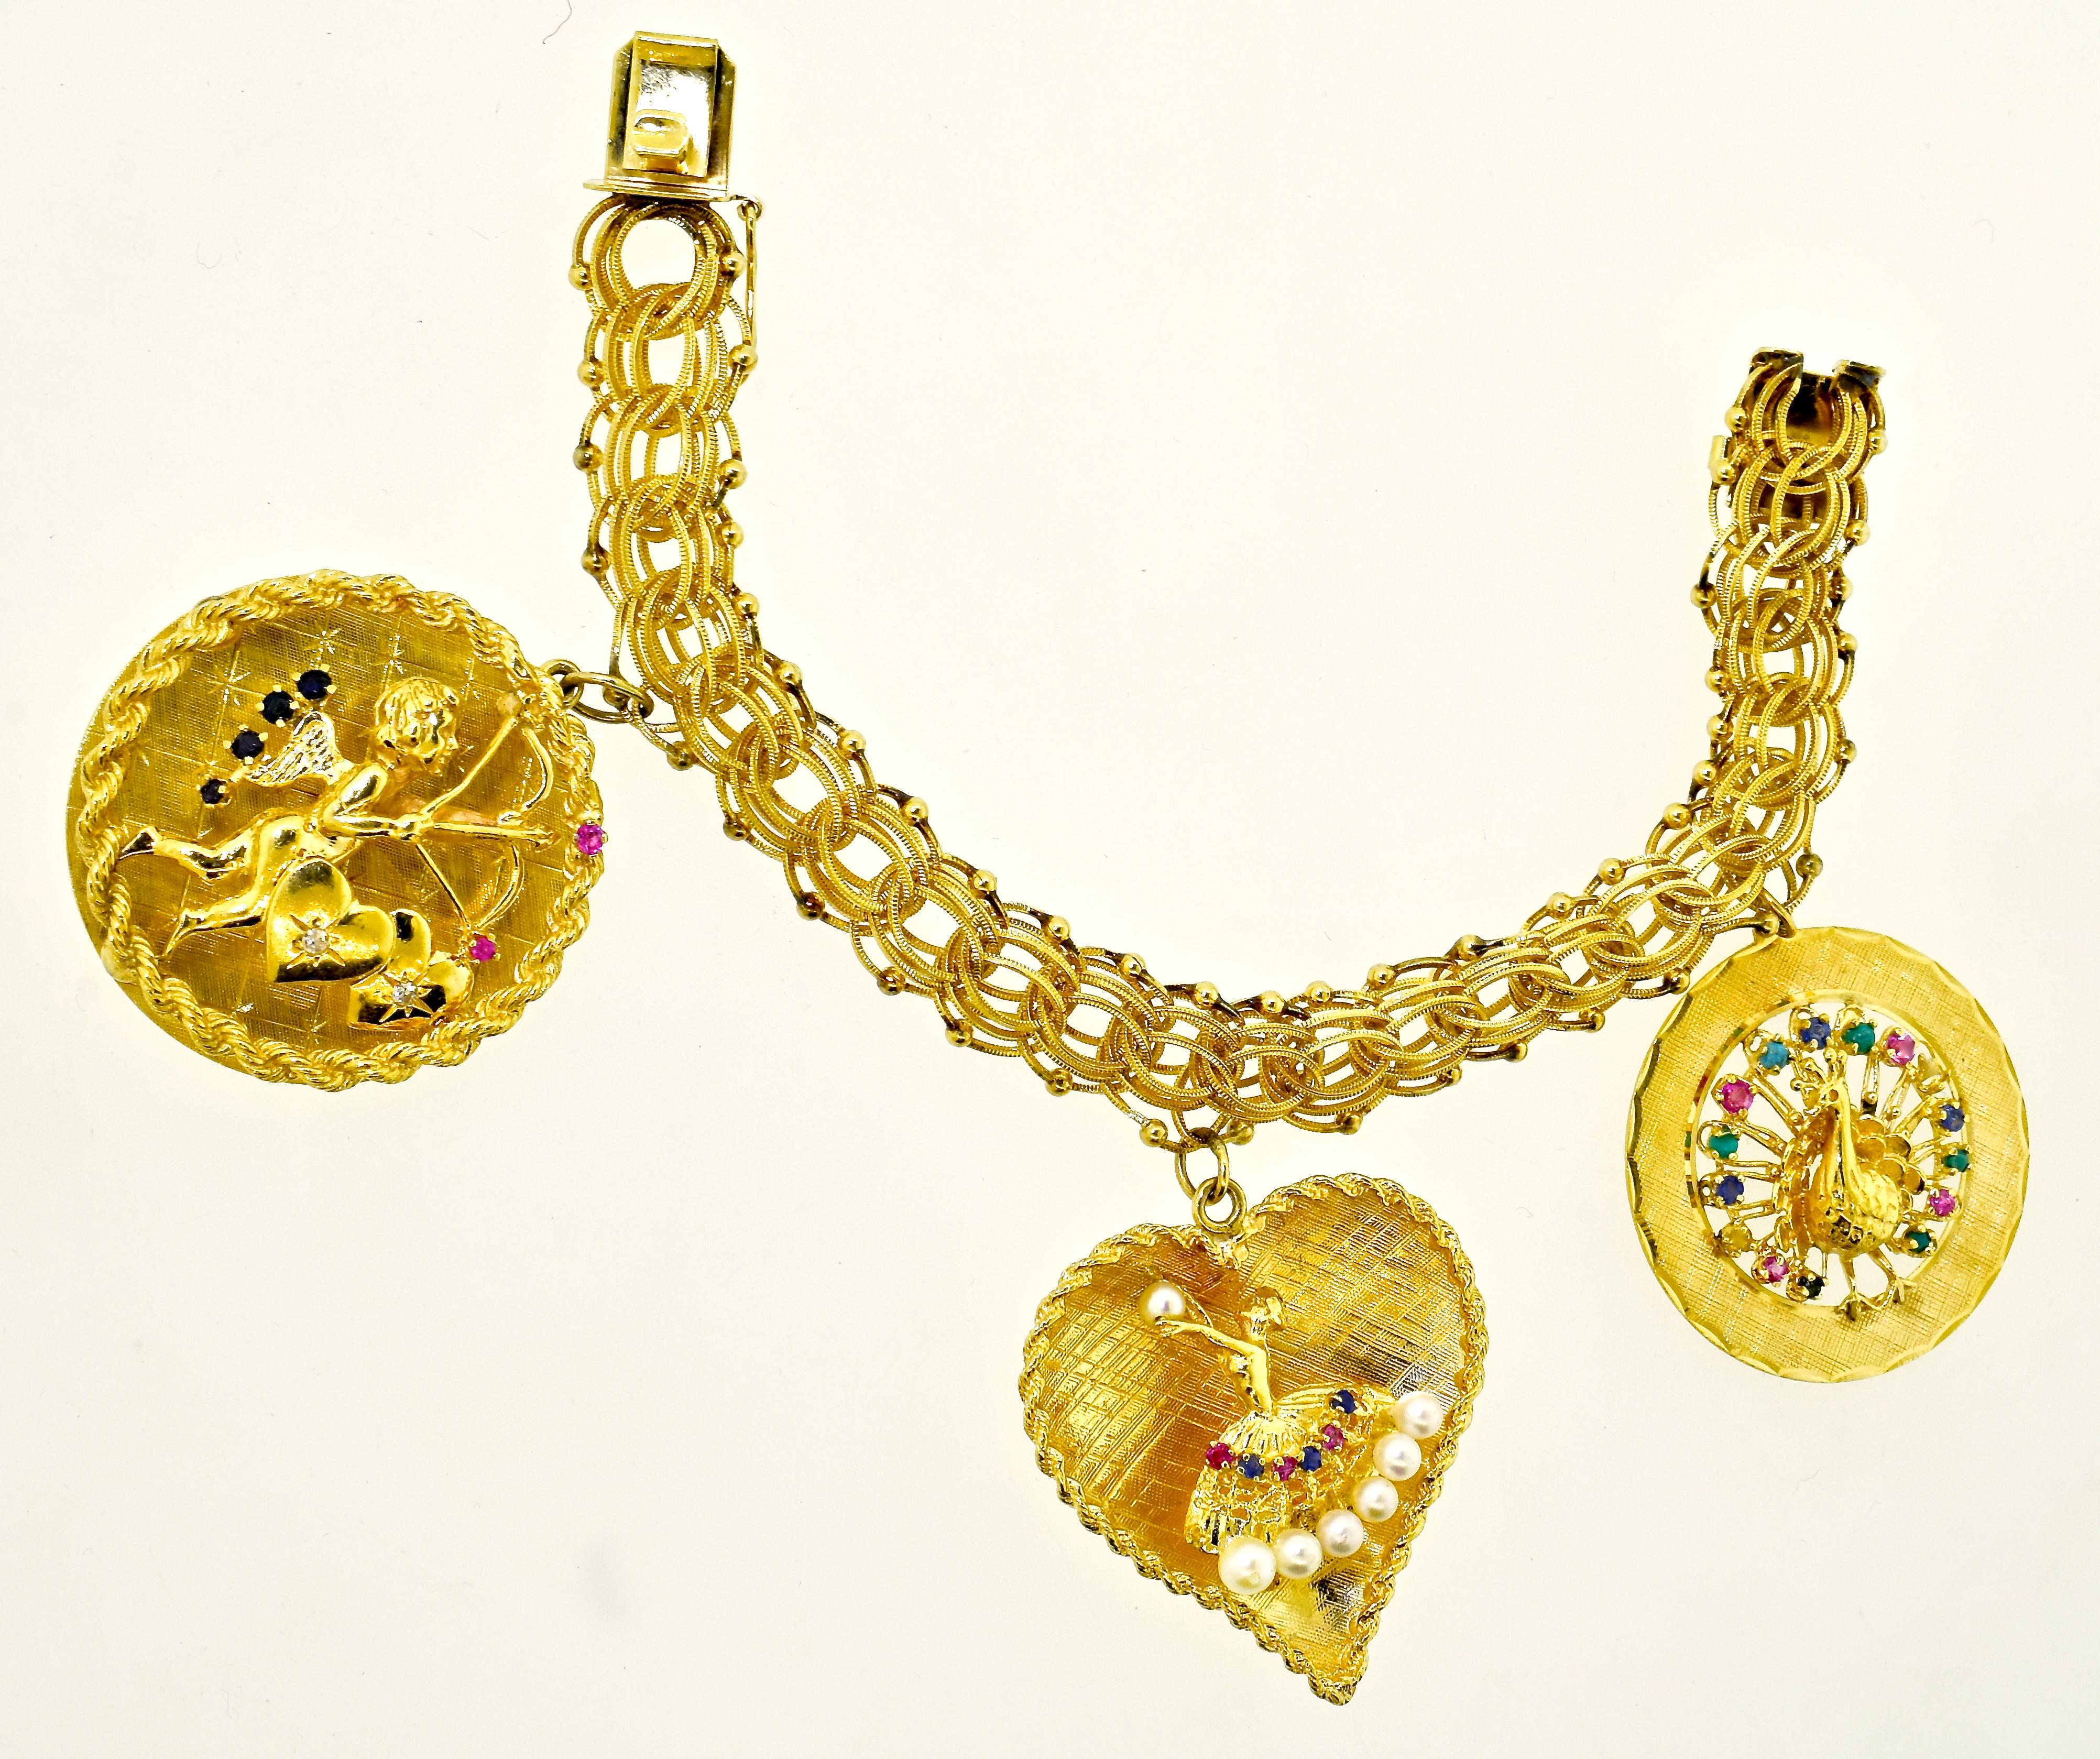 Brilliant Cut Gold Charm Bracelet with Precious Stones, circa 1960